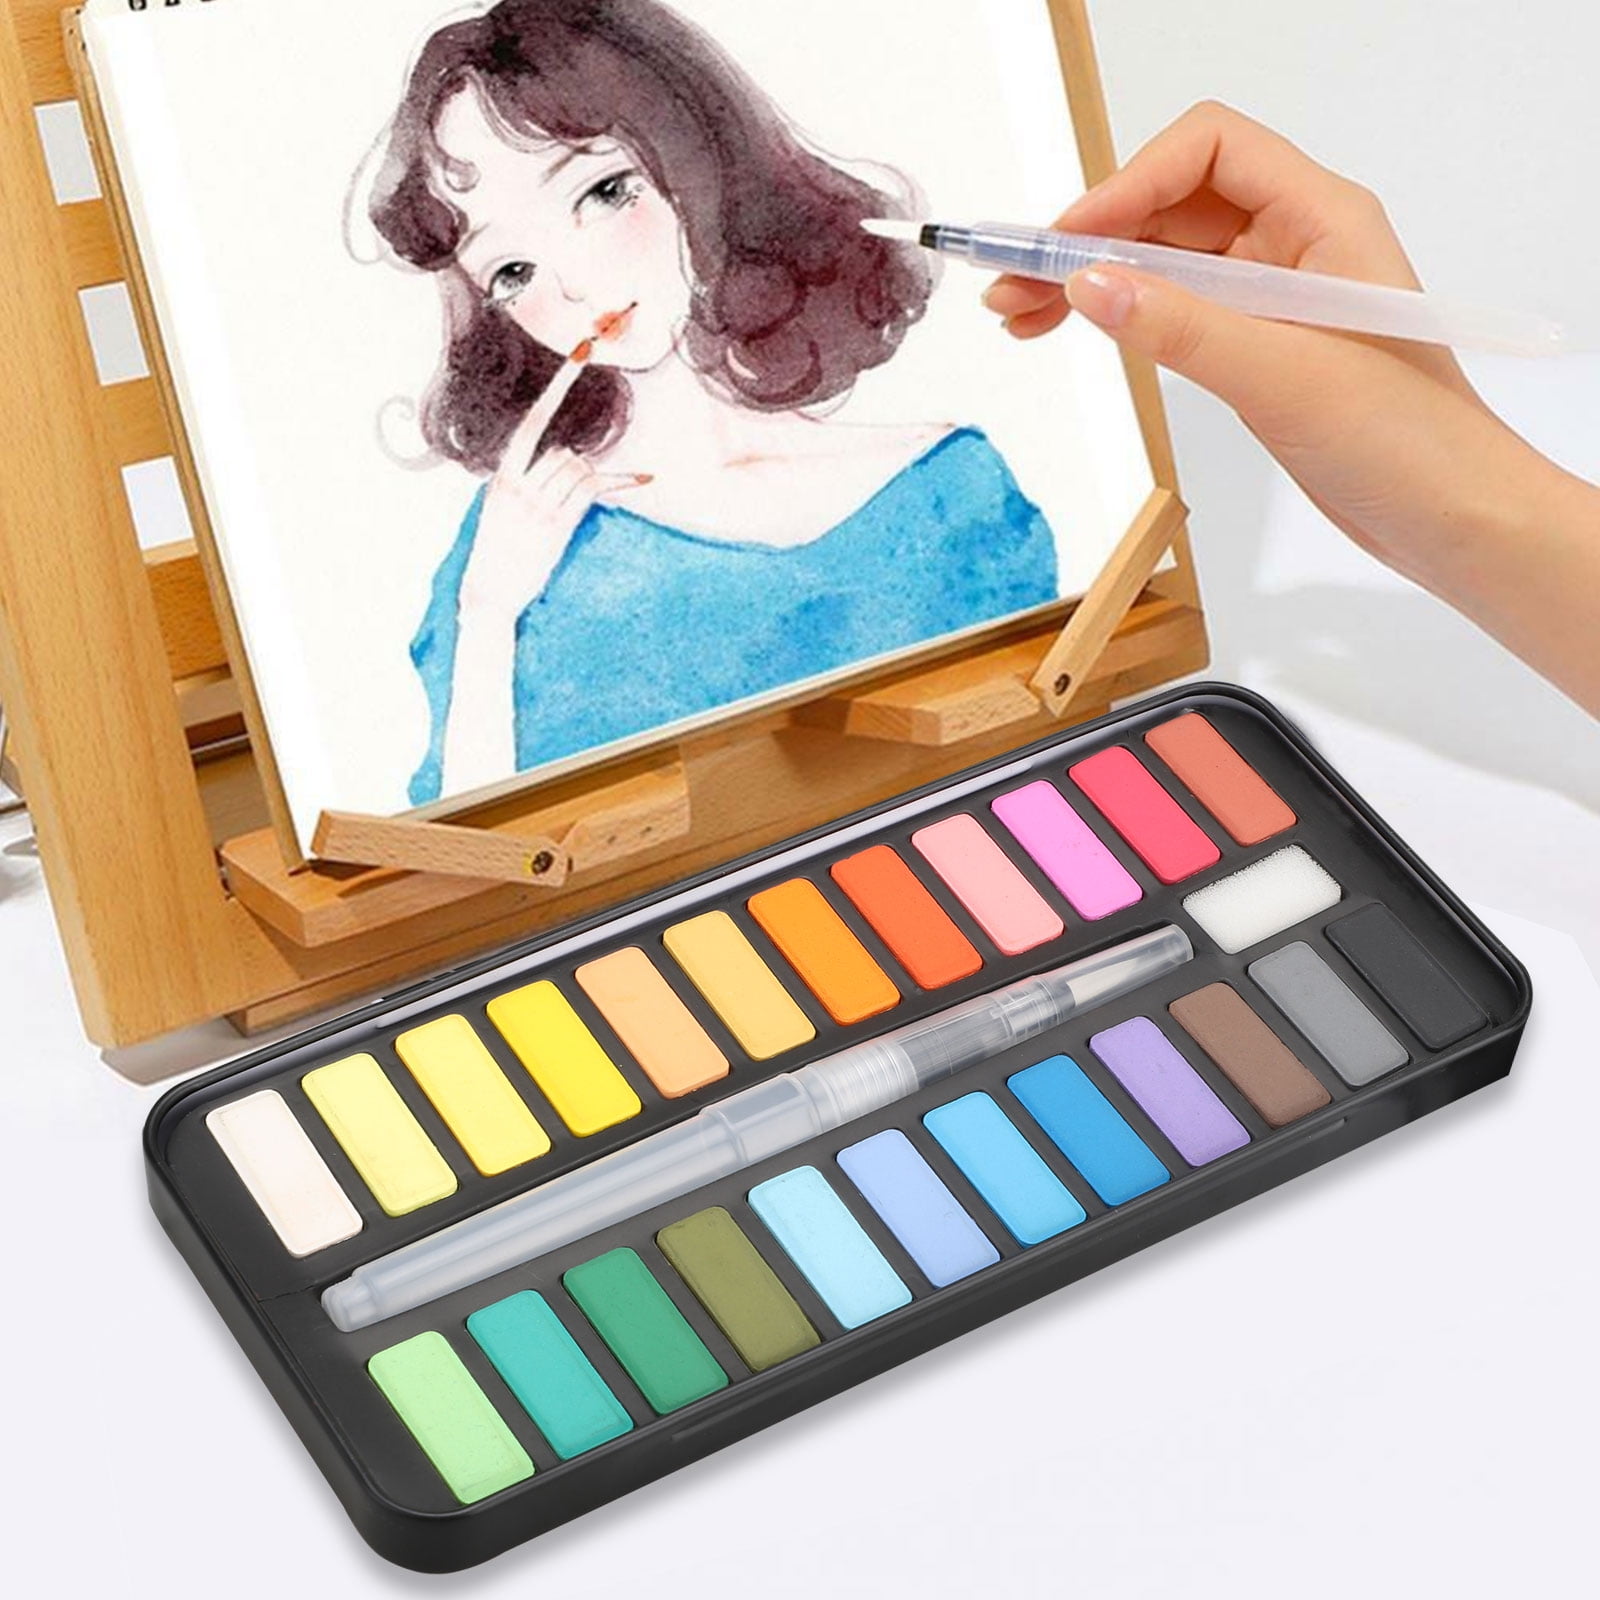 Multicolor, 3 Pack Watercolor Paint Set a Paint Brush and a Mixing Pan Built into The Palette Each Palette Contains 12 Different Vibrant Colors 